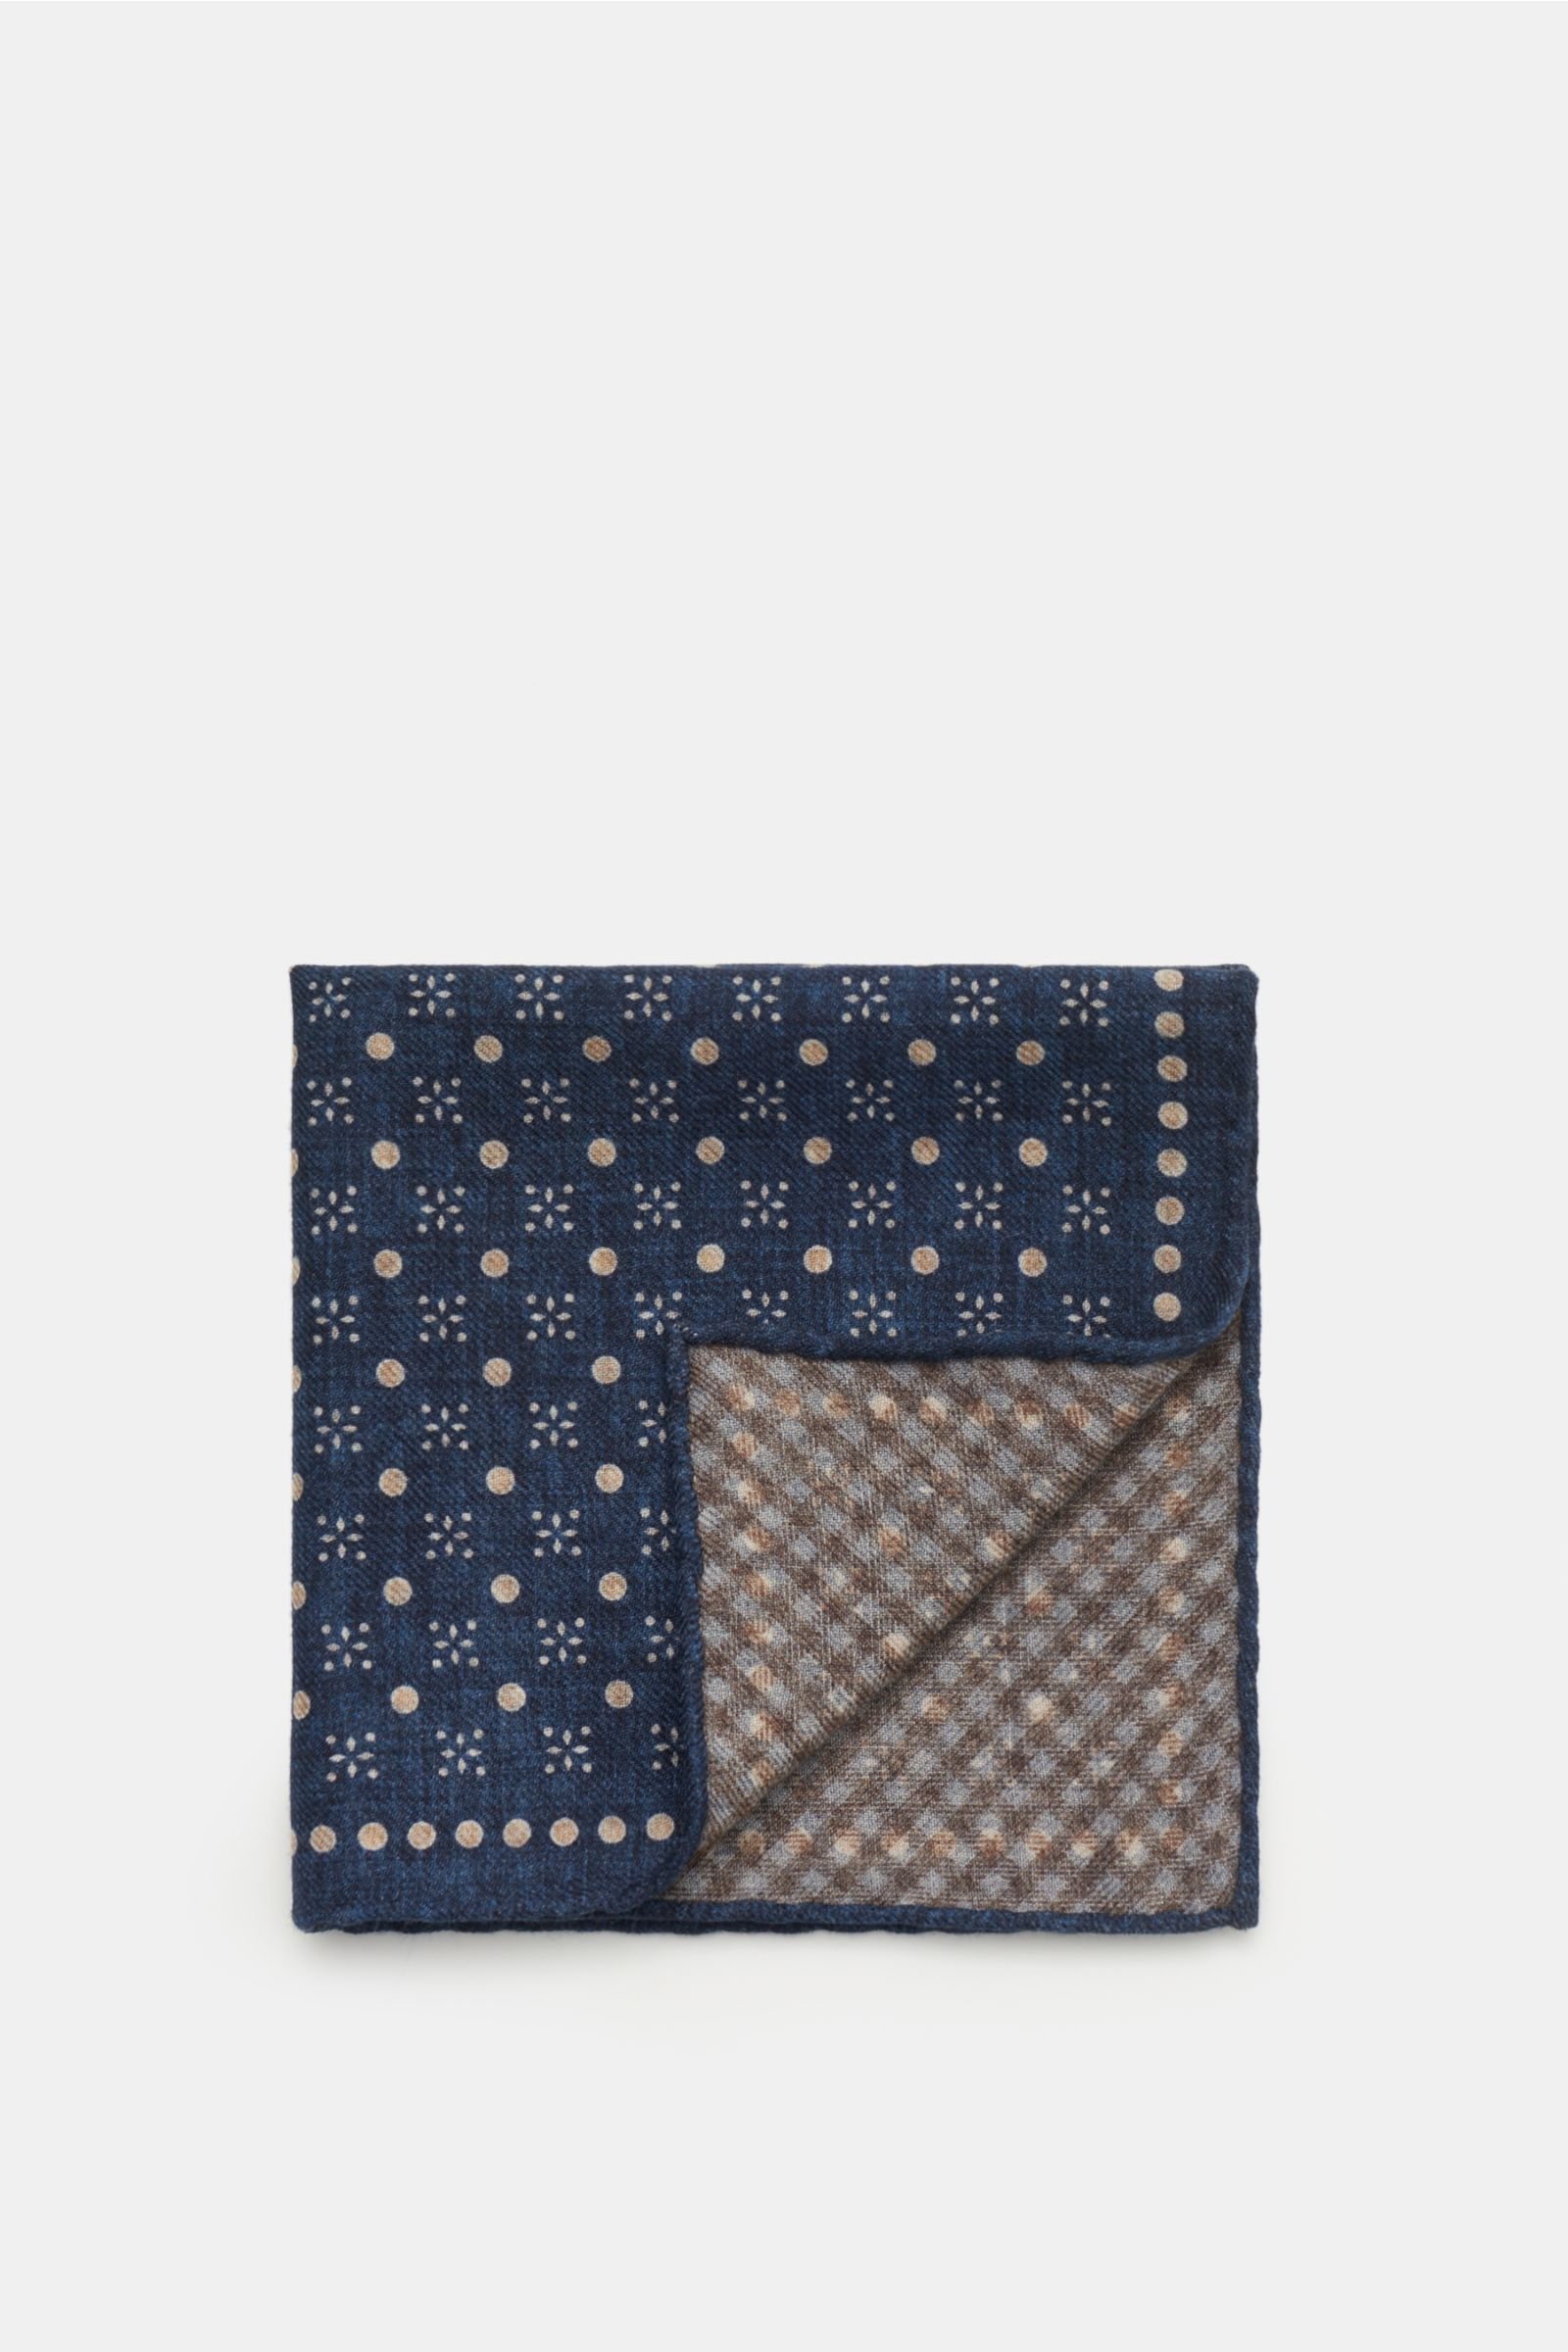 Pocket square navy/grey-brown patterned